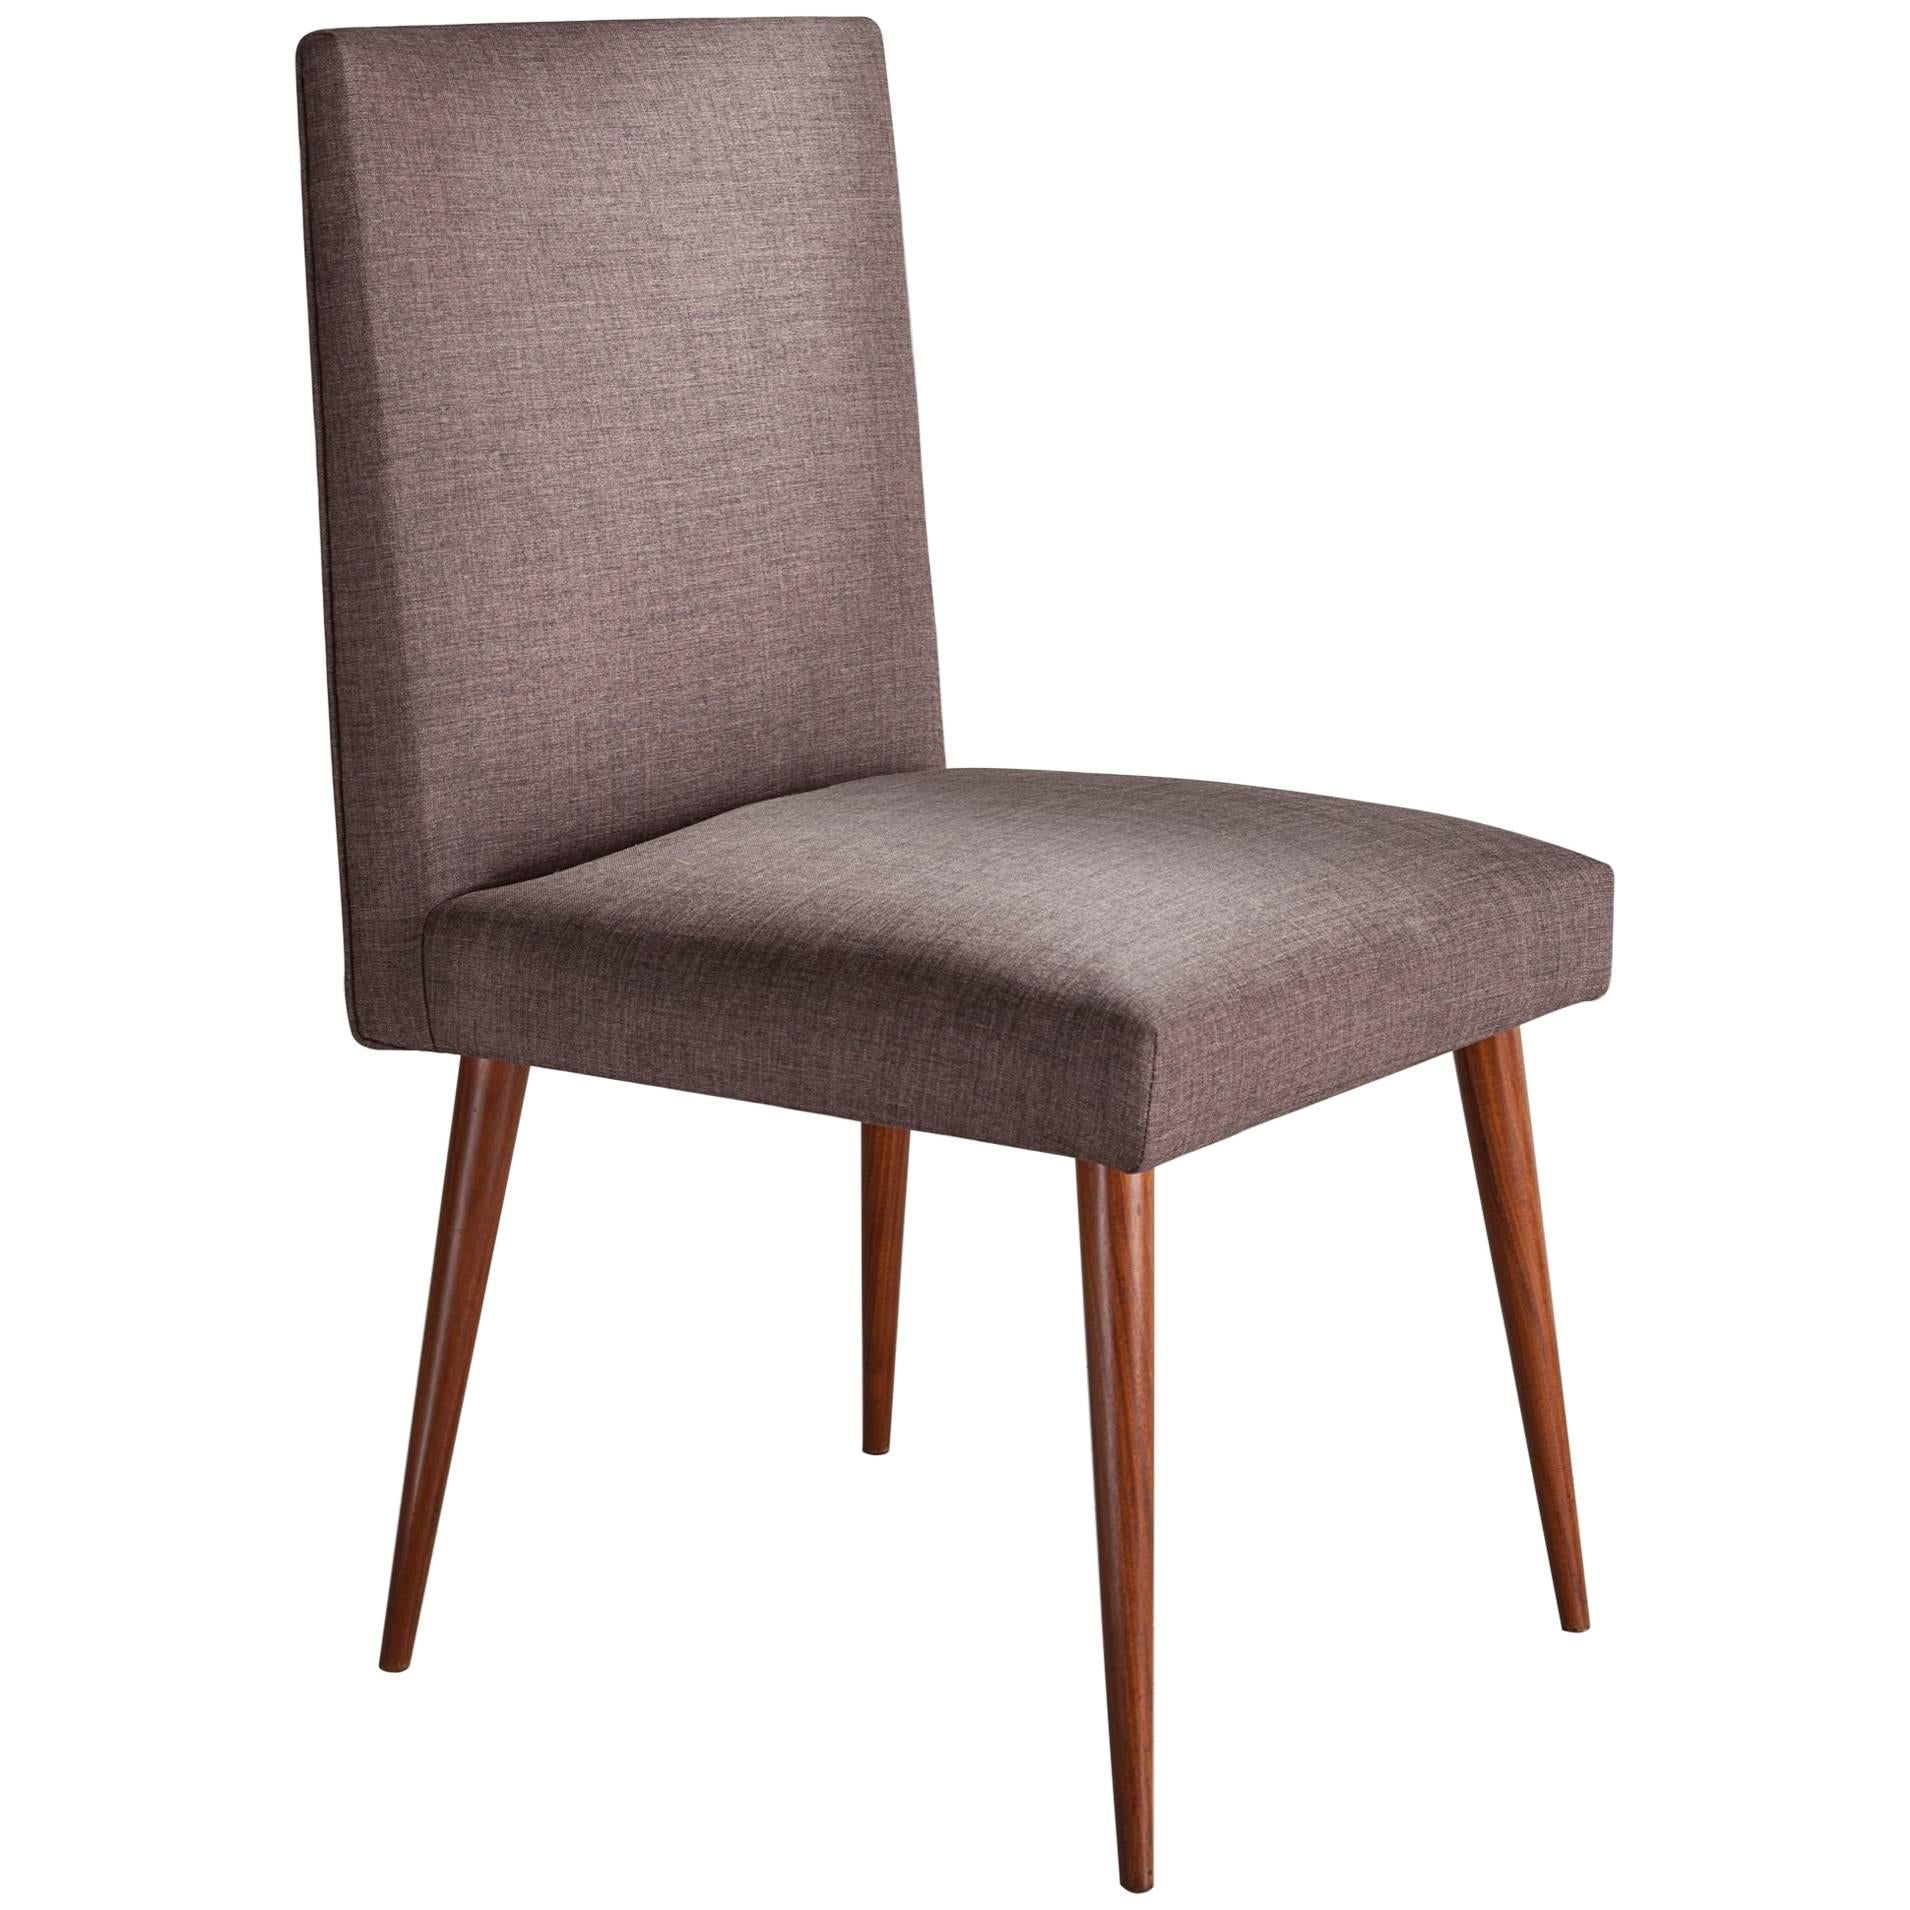 Chair in Solid Brazilian Hardwood